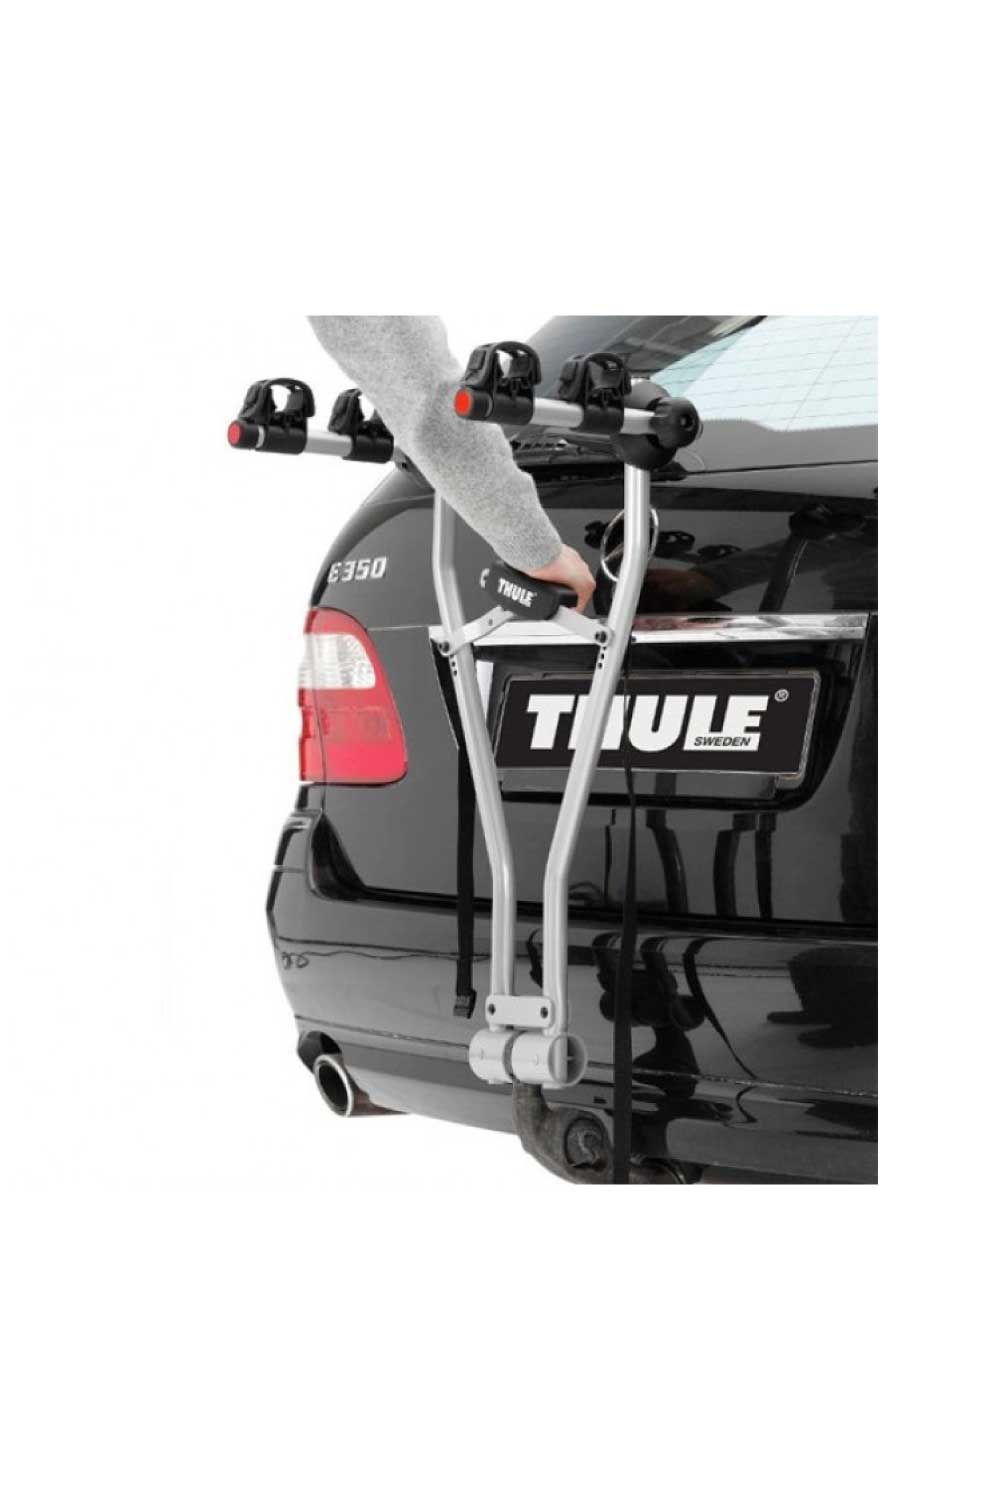 thule xpress 3 bike carrier